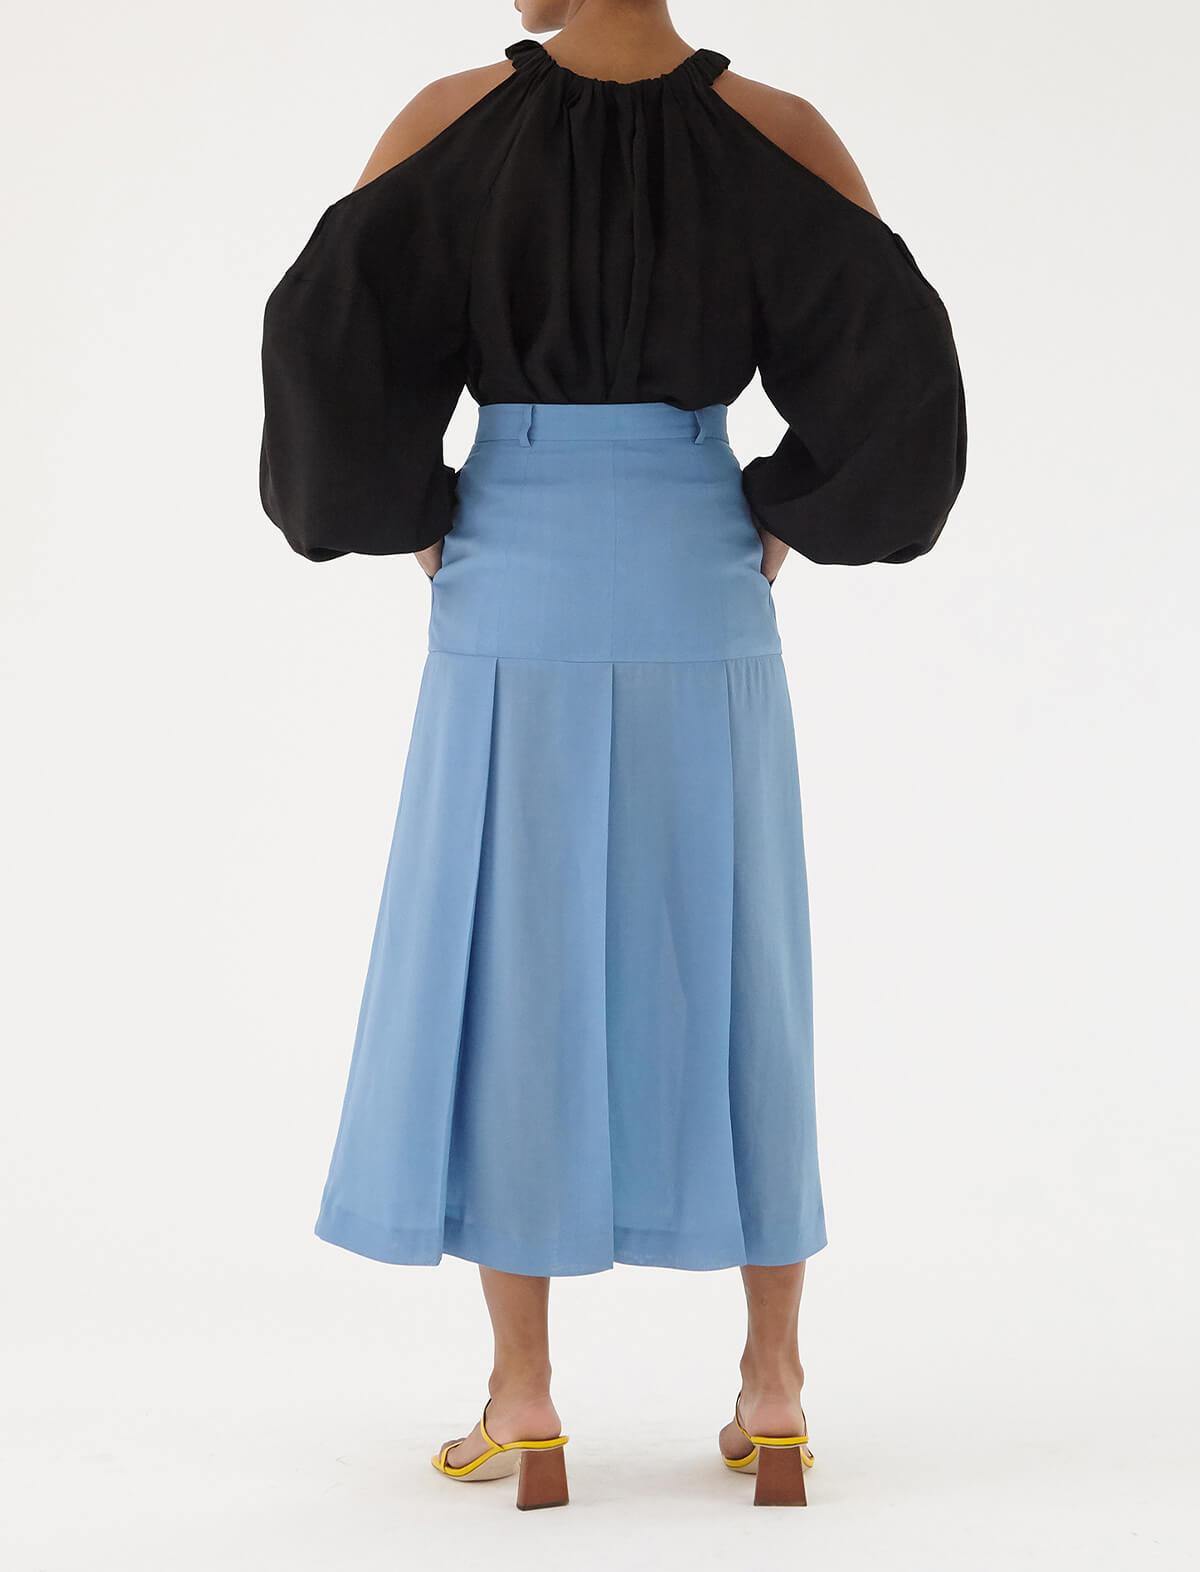 REJINA PYO Miller Viscose Skirt In Blue | CLOSET Singapore